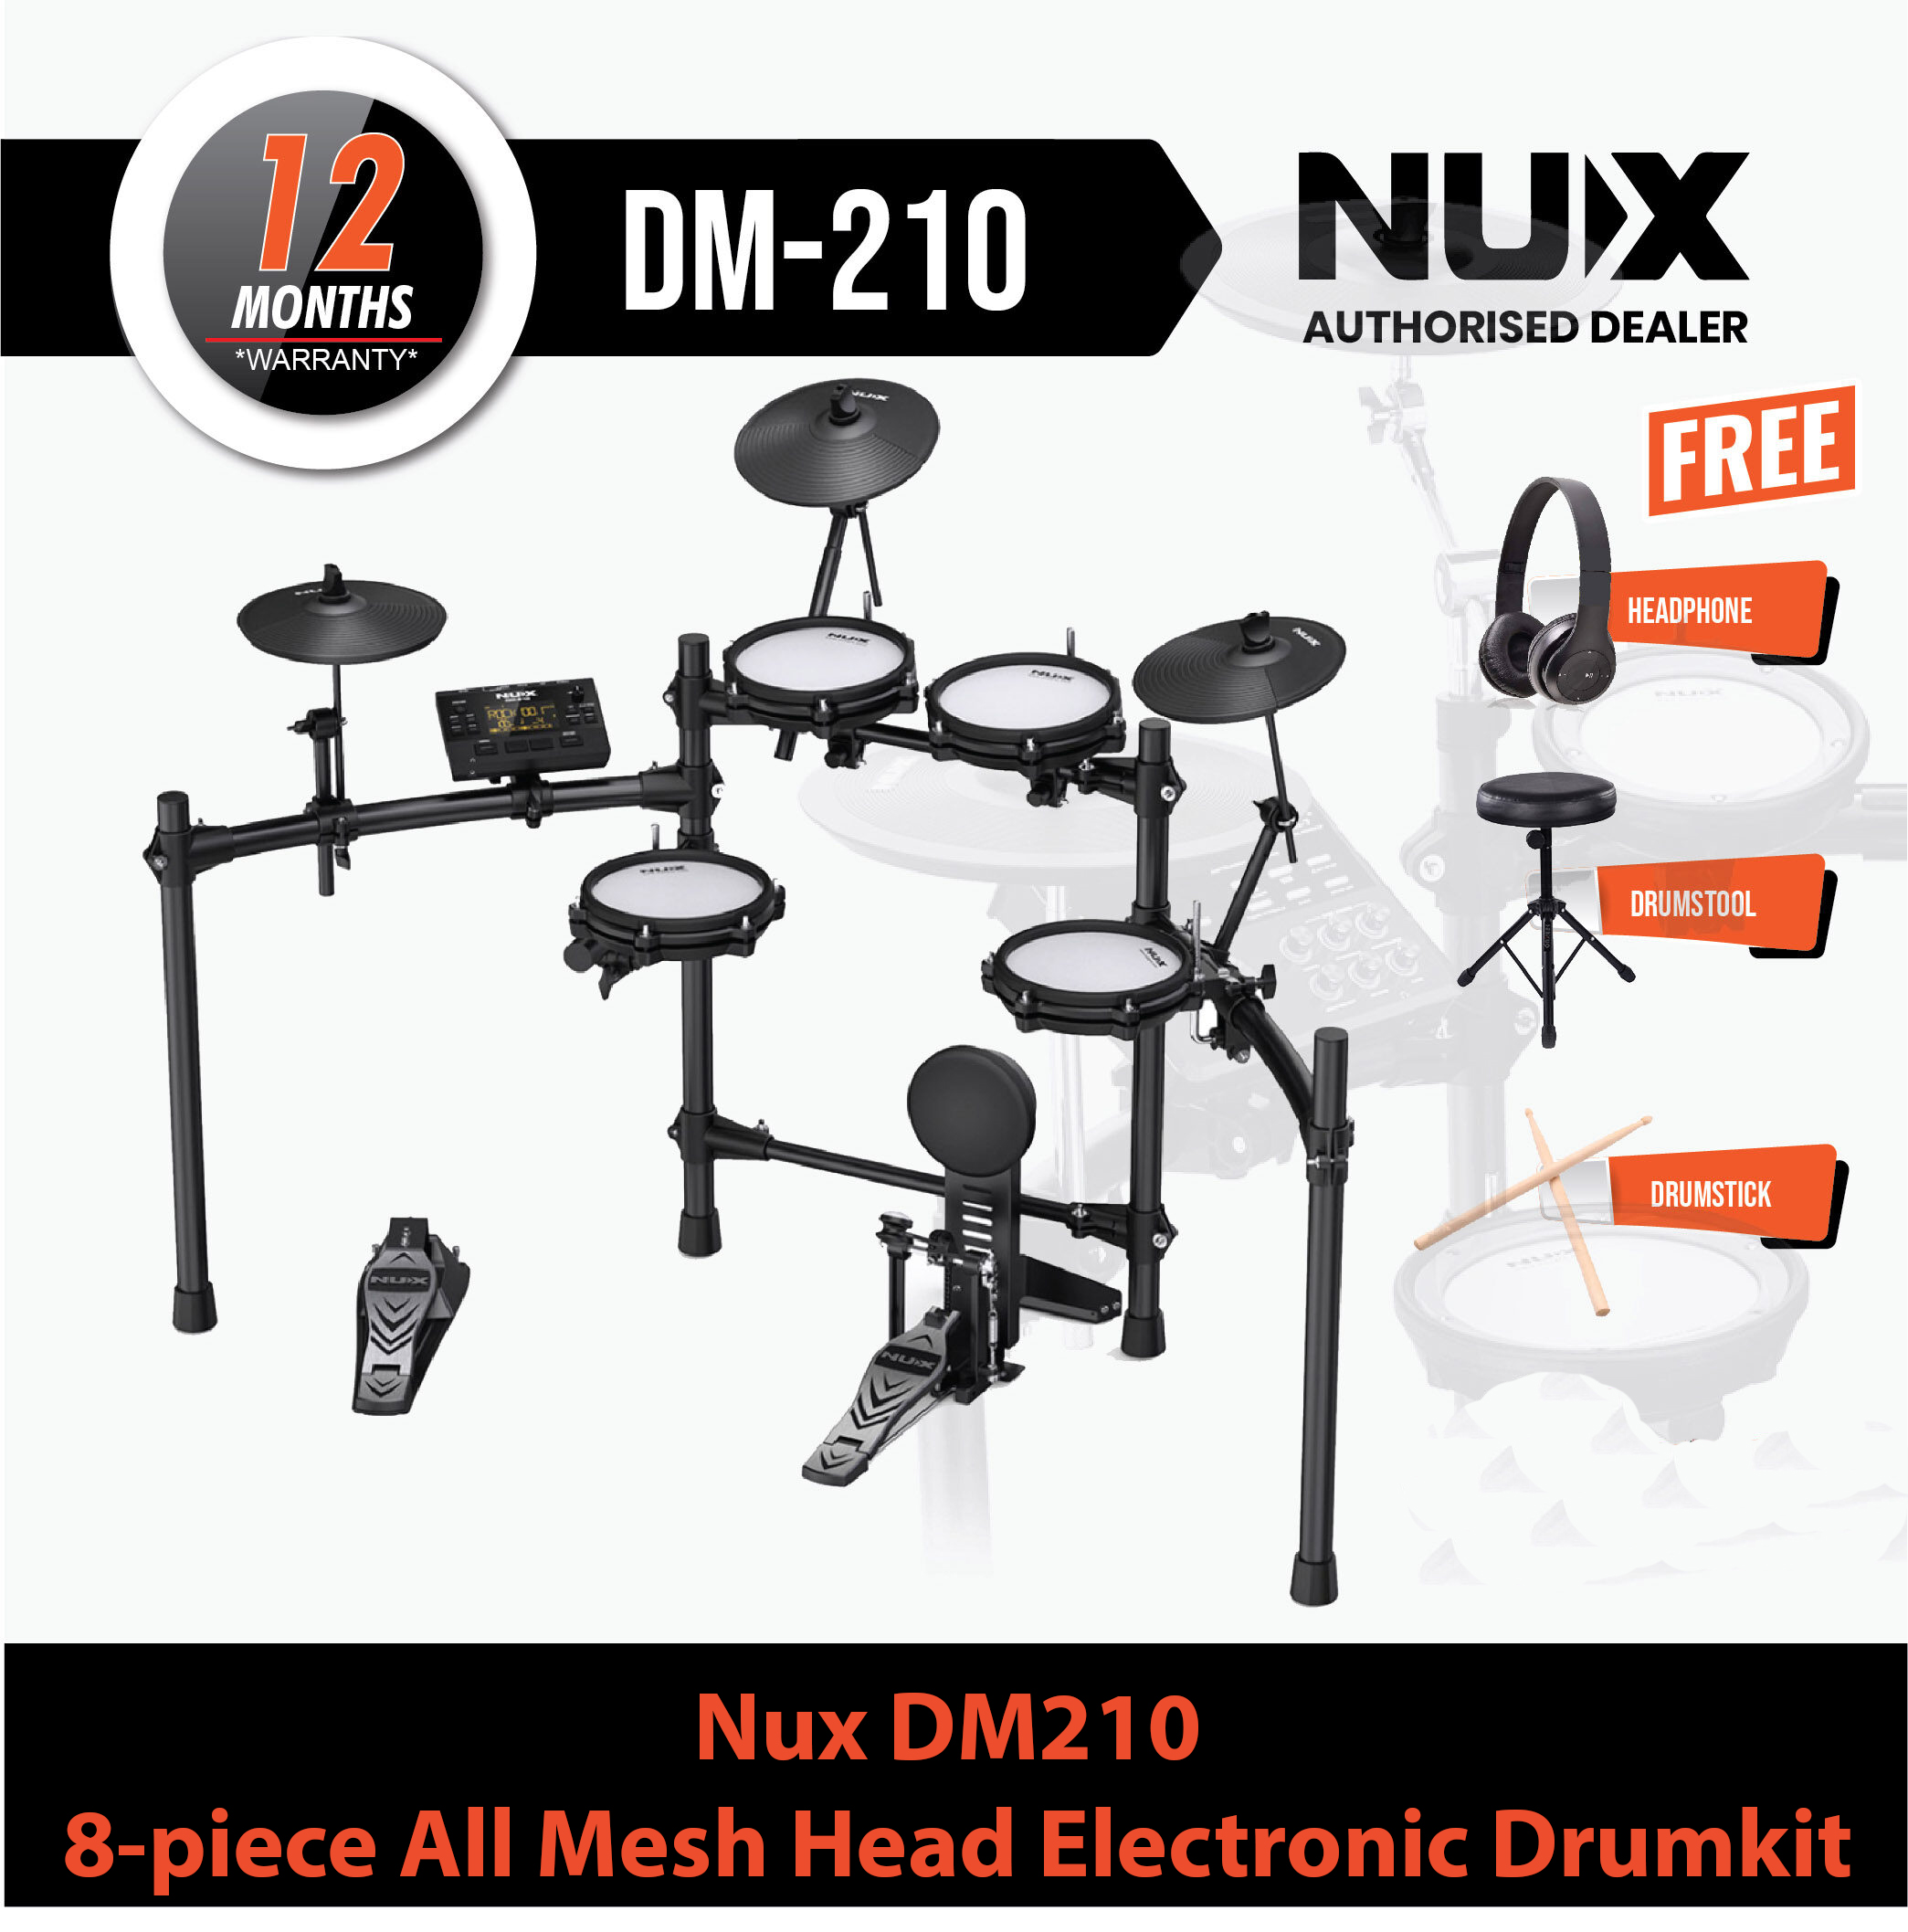 NUX DM-210 Digital Drum Set With Mesh Heads (Dual Trigger,BT, Coach, USB for MIDI)